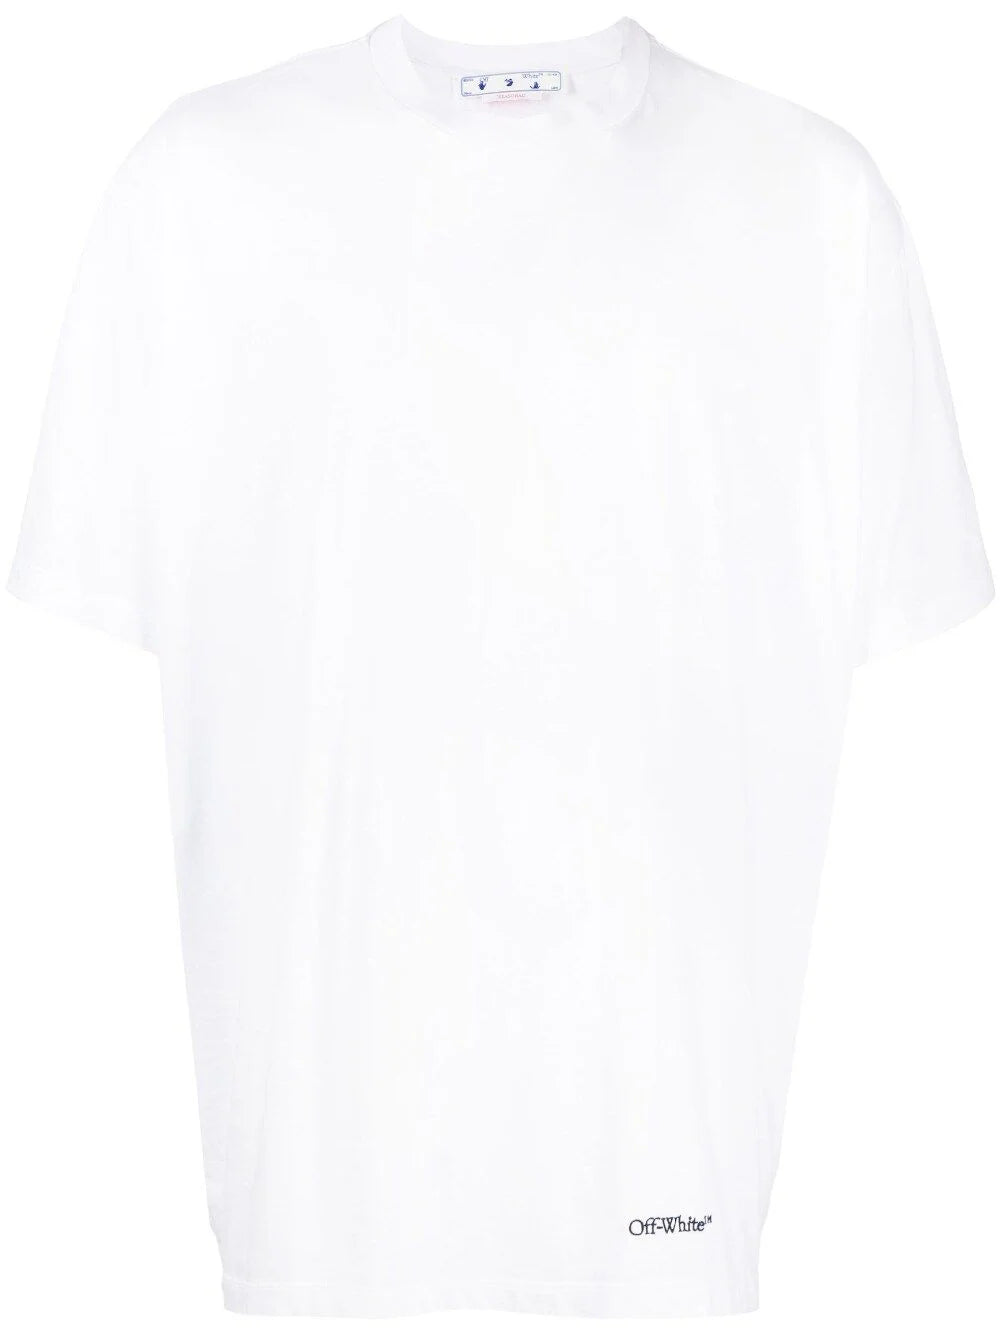 Off-White Scribble Diag Oversized S/S White T-Shirt